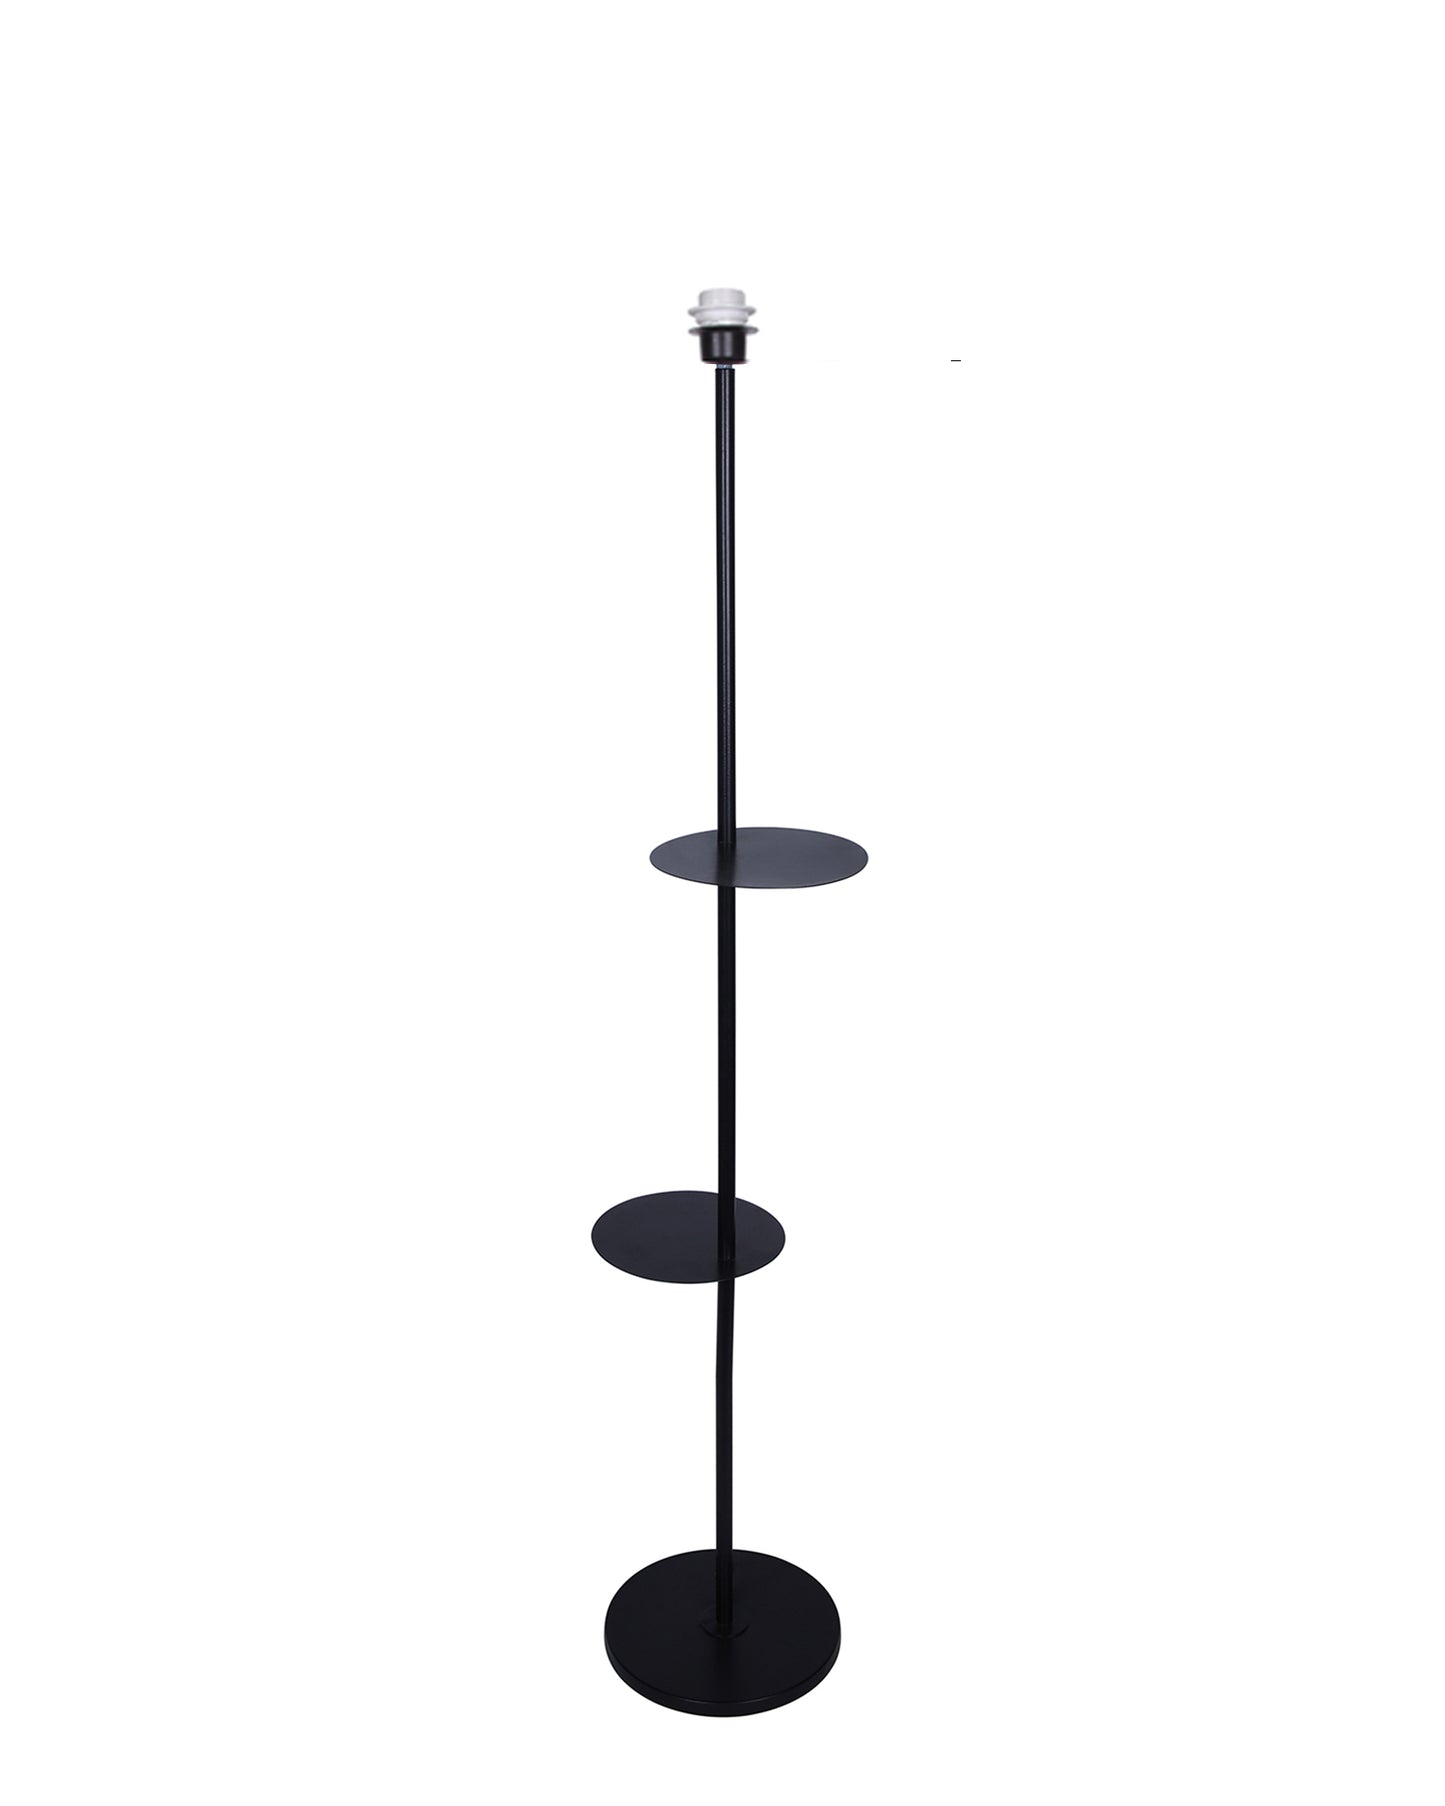 Contemporary Duo Shelf Metal Floor Lamp, Bedside Living room Office Home Decor Lamp, Black